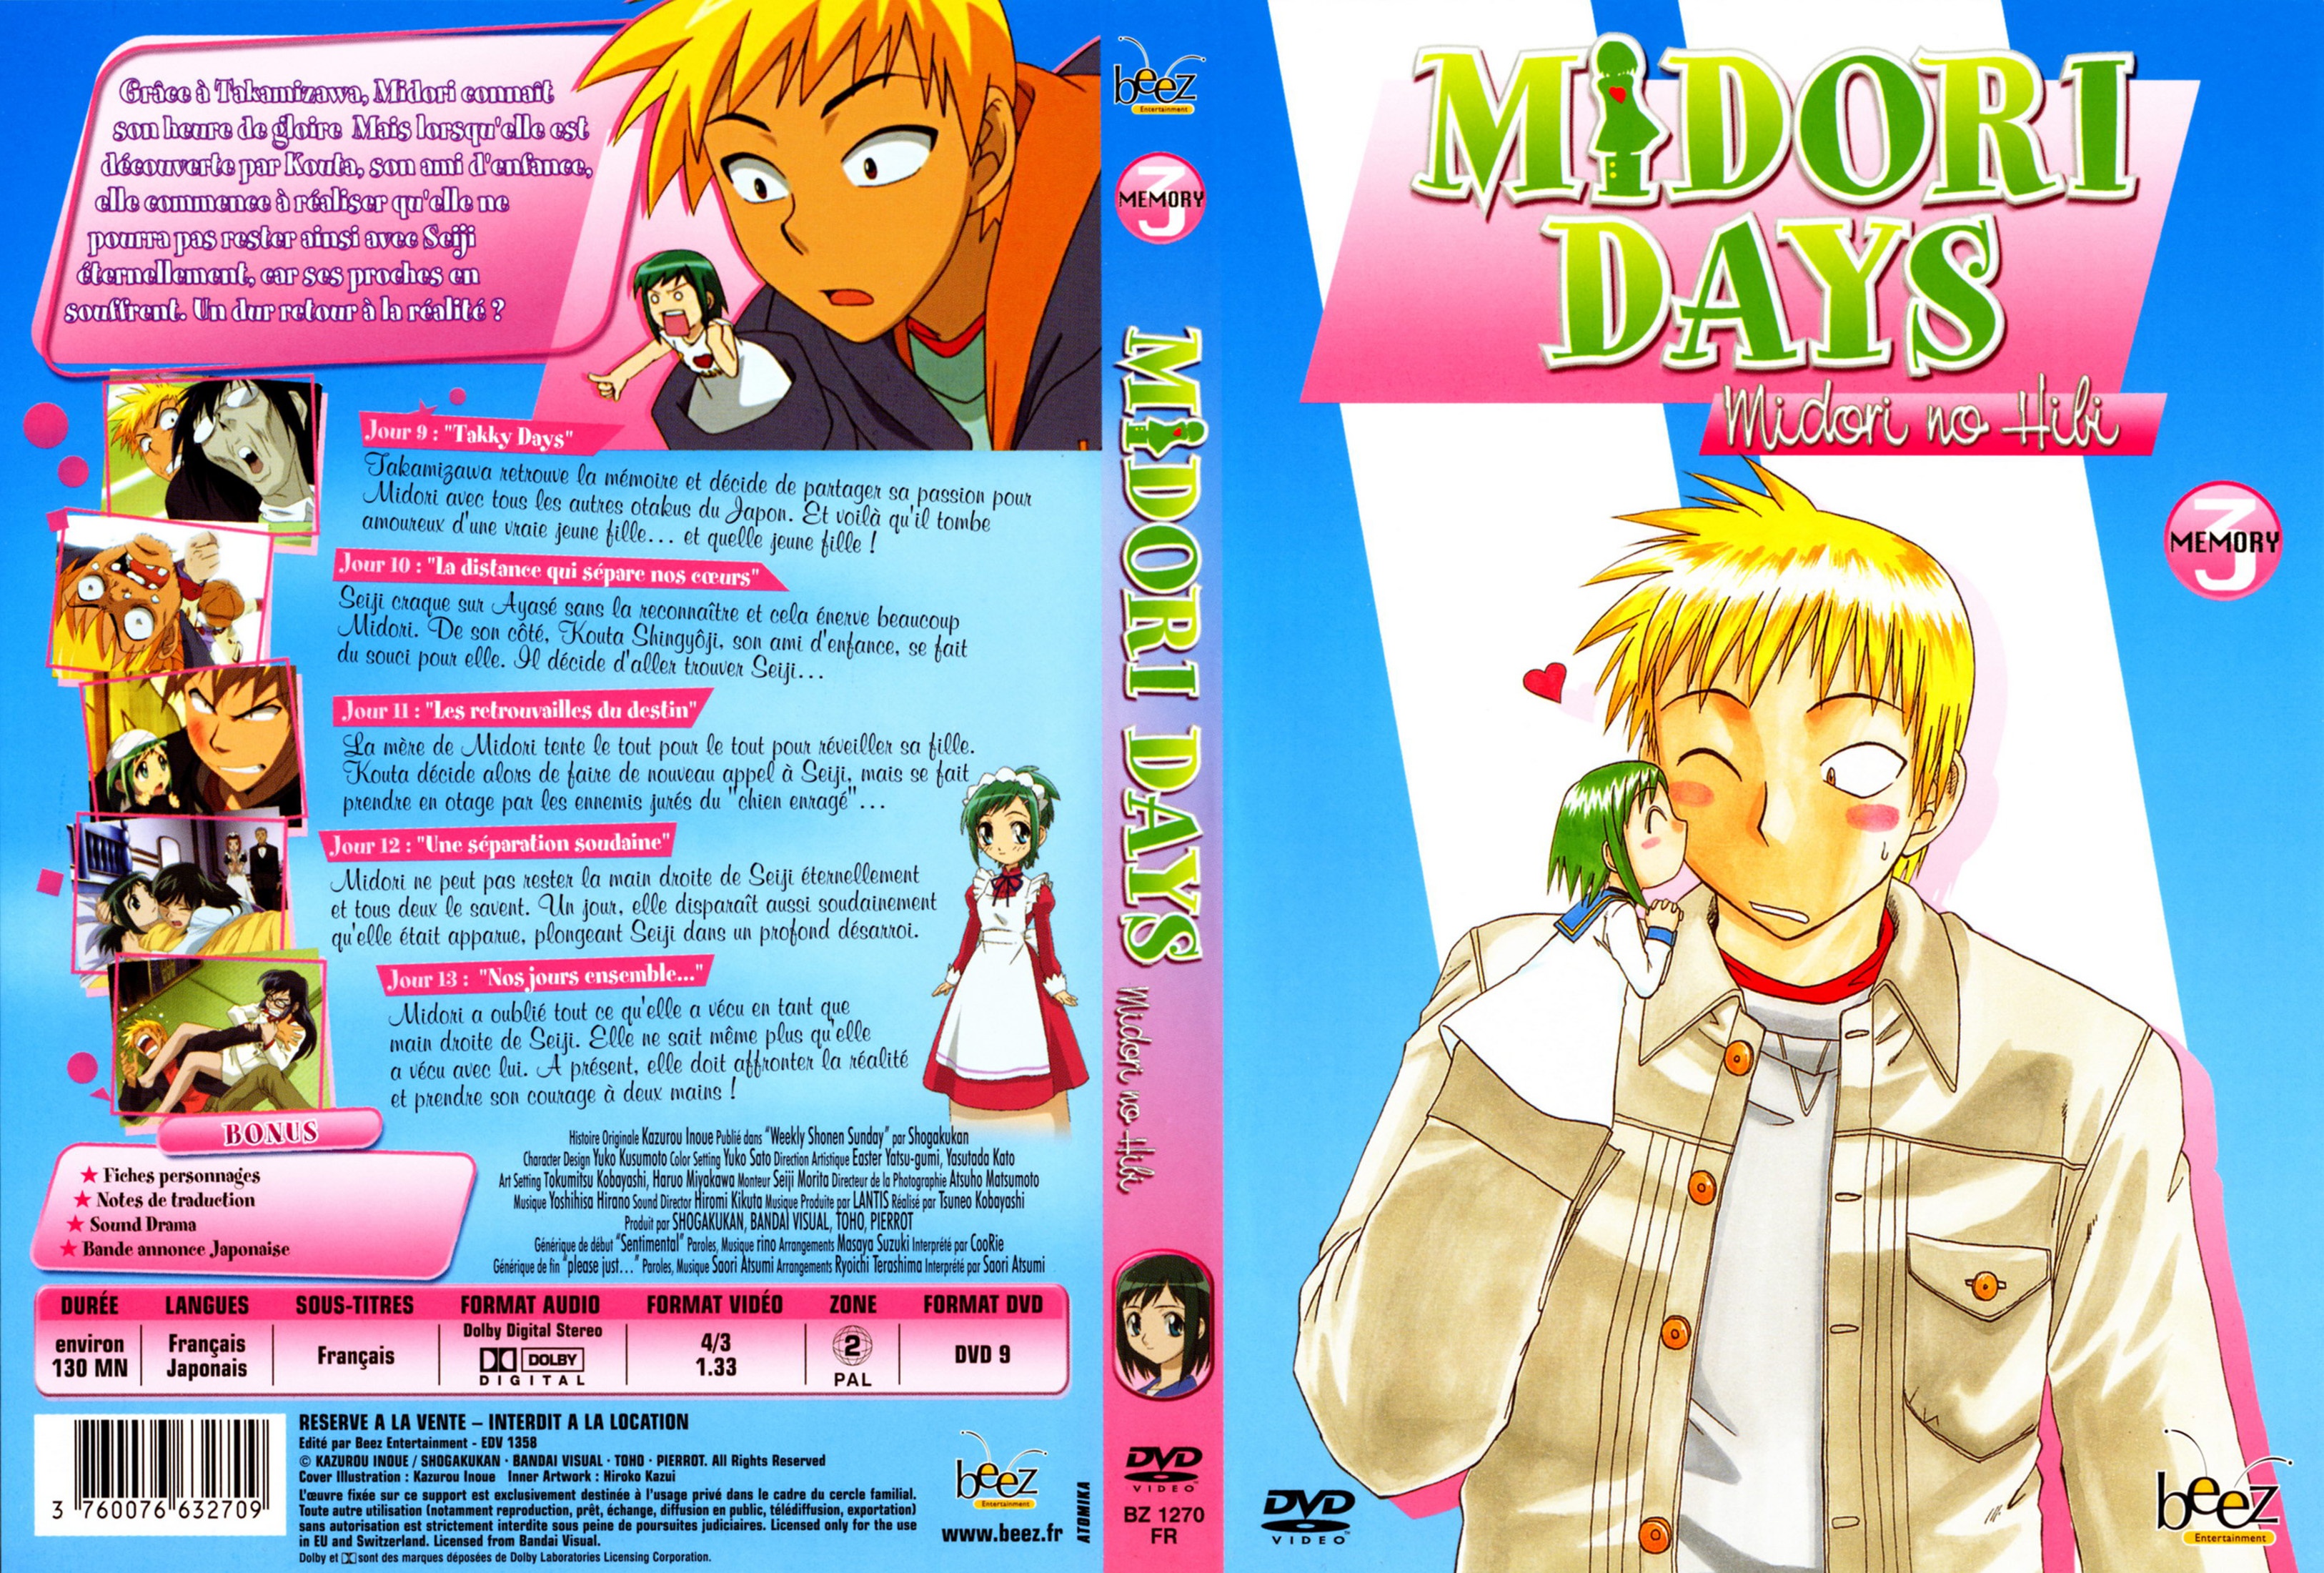 Jaquette DVD Midori days vol 3